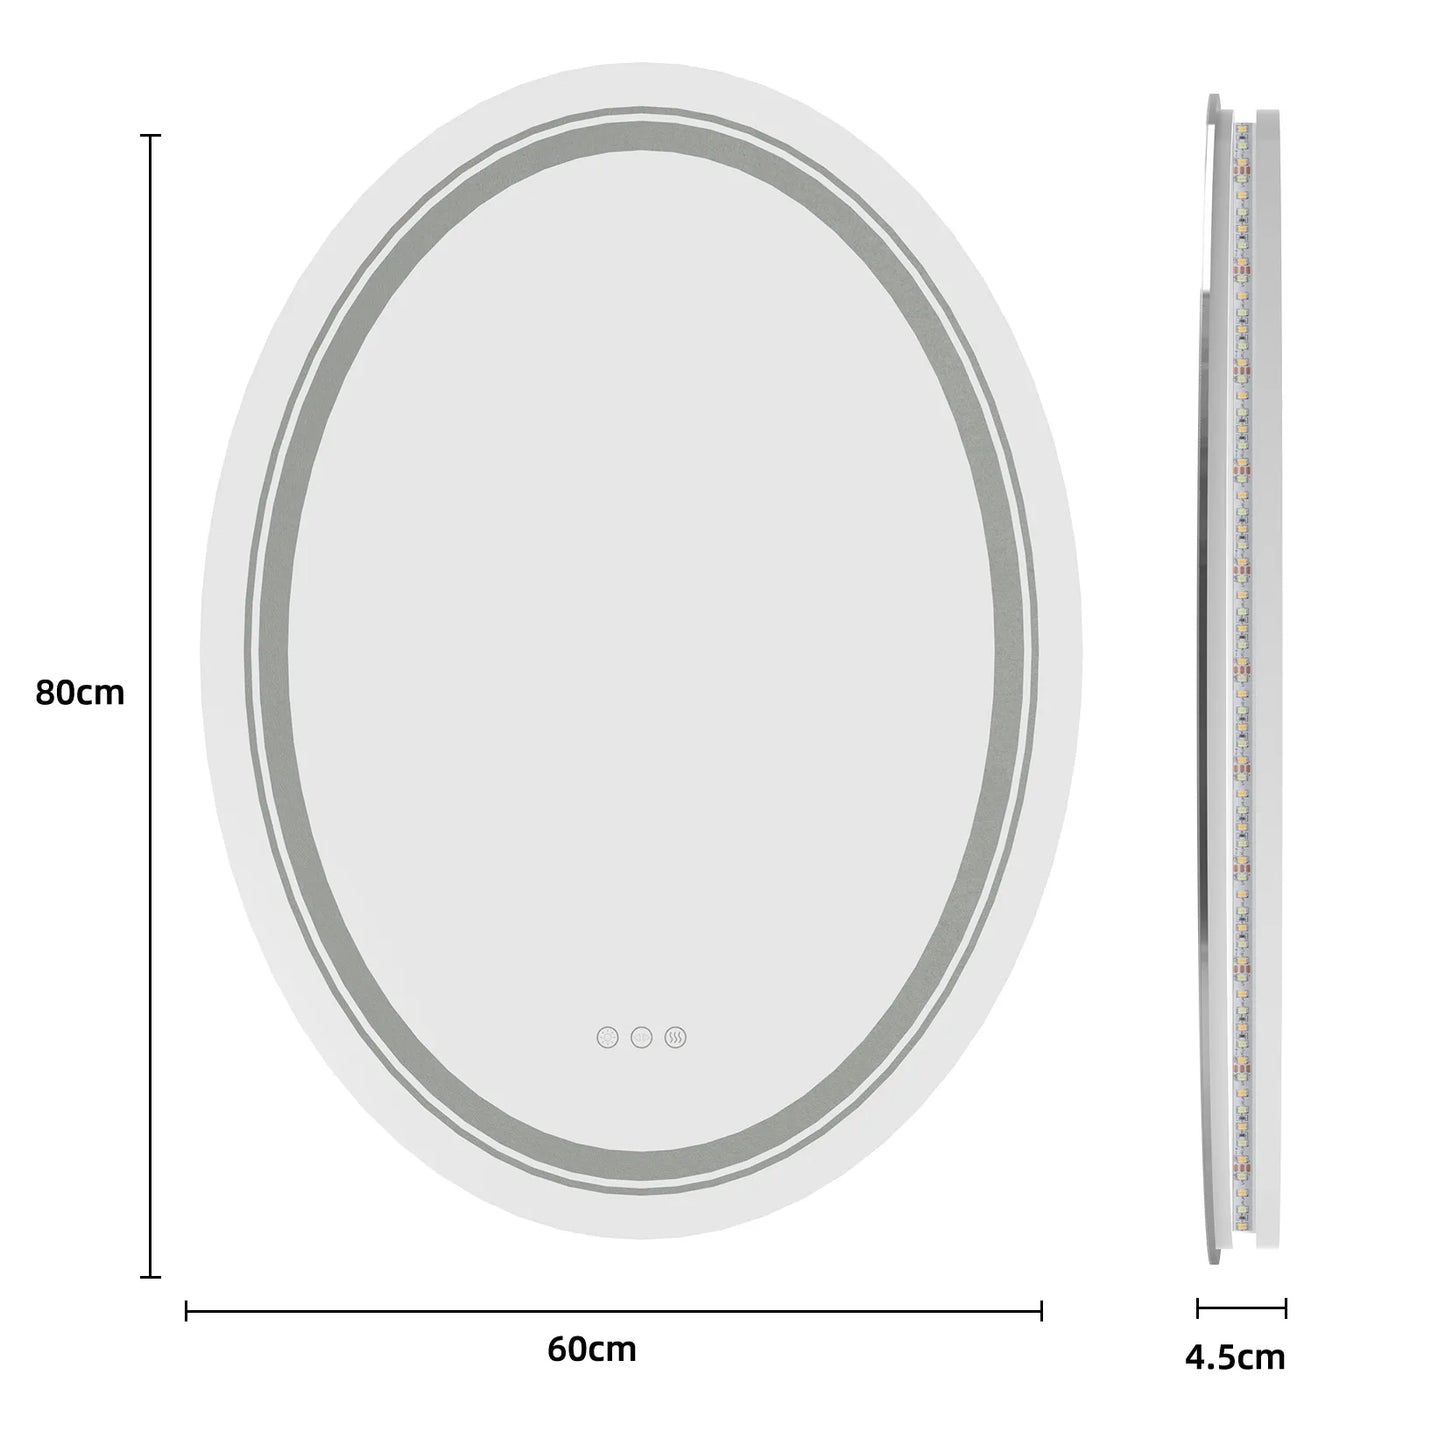 Oval LED Bathroom Mirror